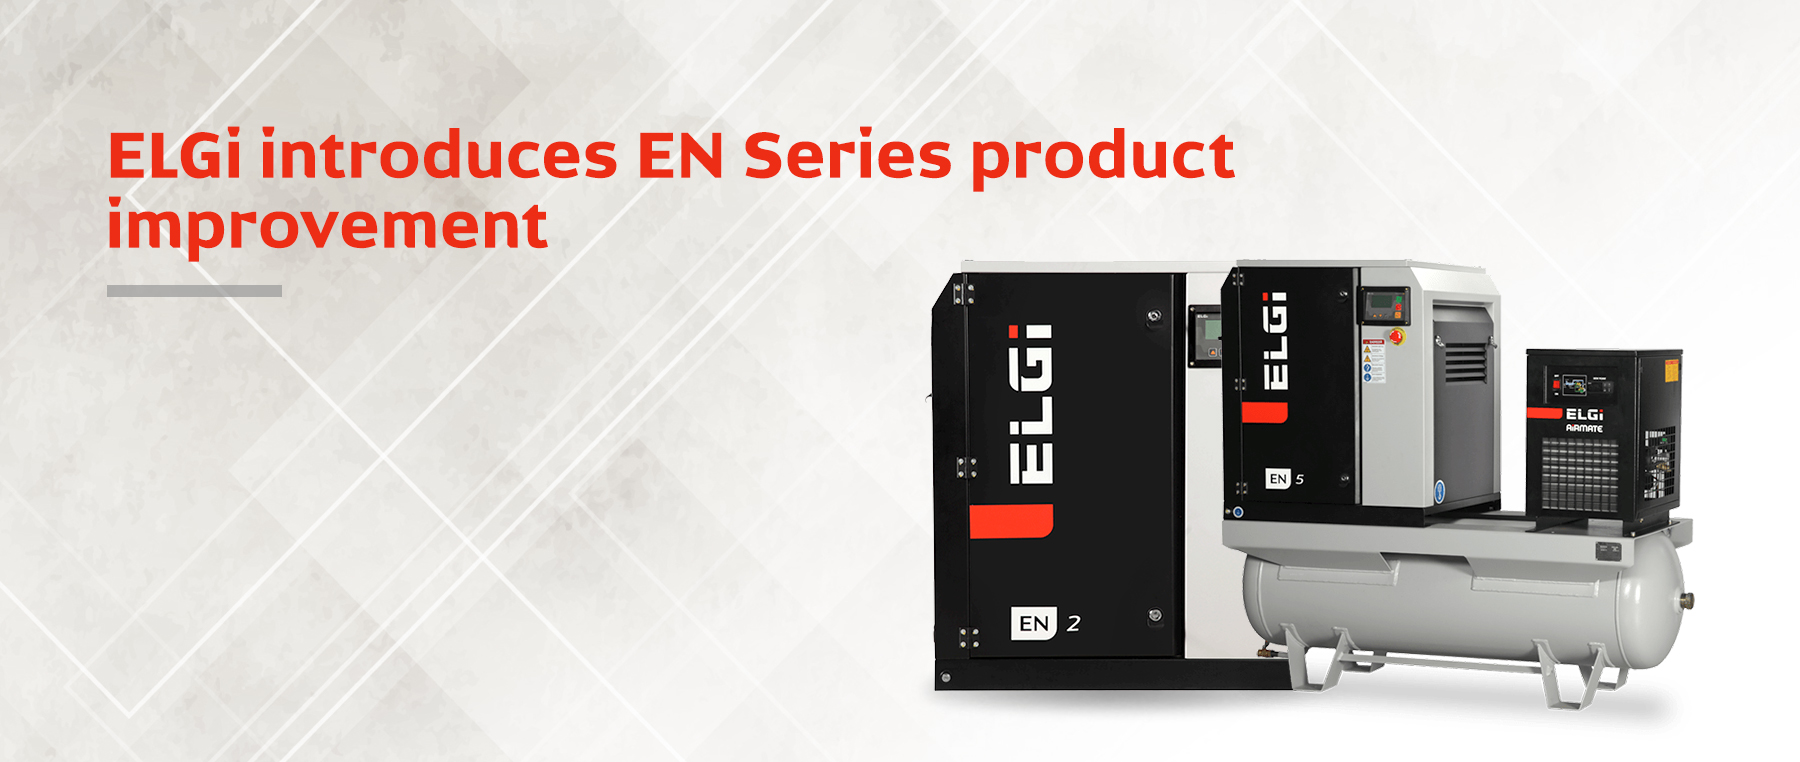 ELGi Introduces EN Series Product Improvement